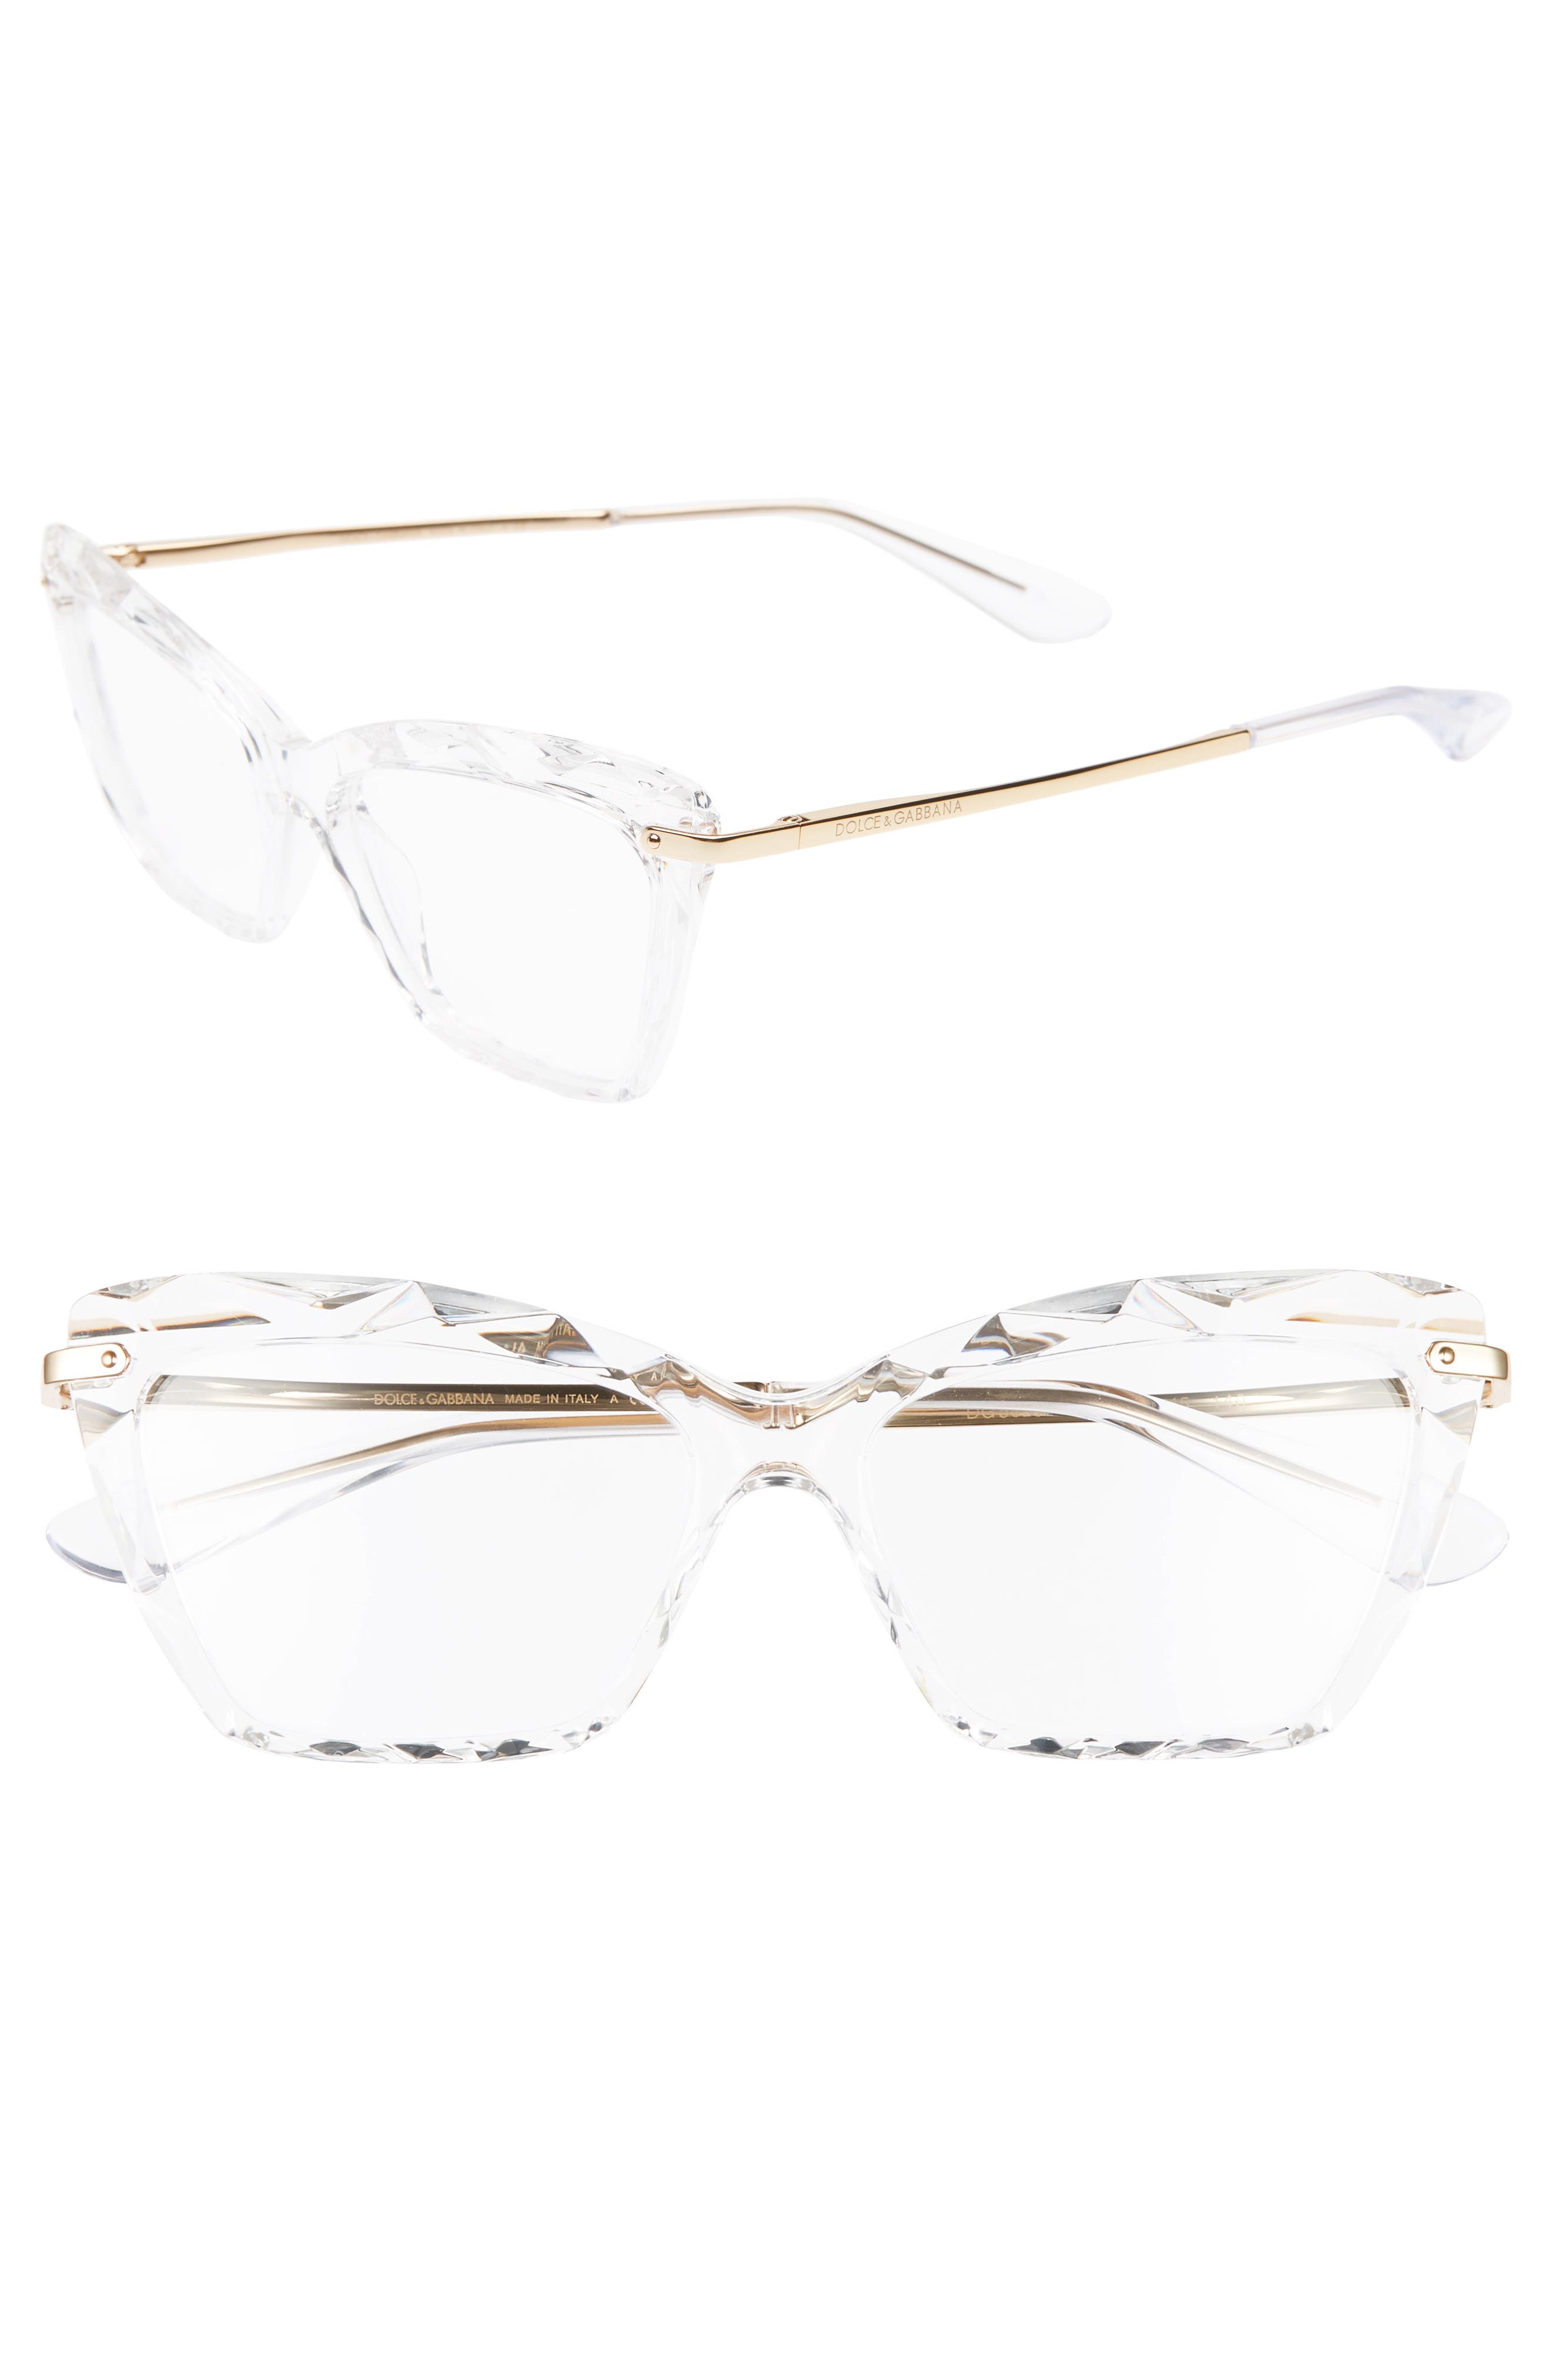 cat eye dolce and gabbana glasses